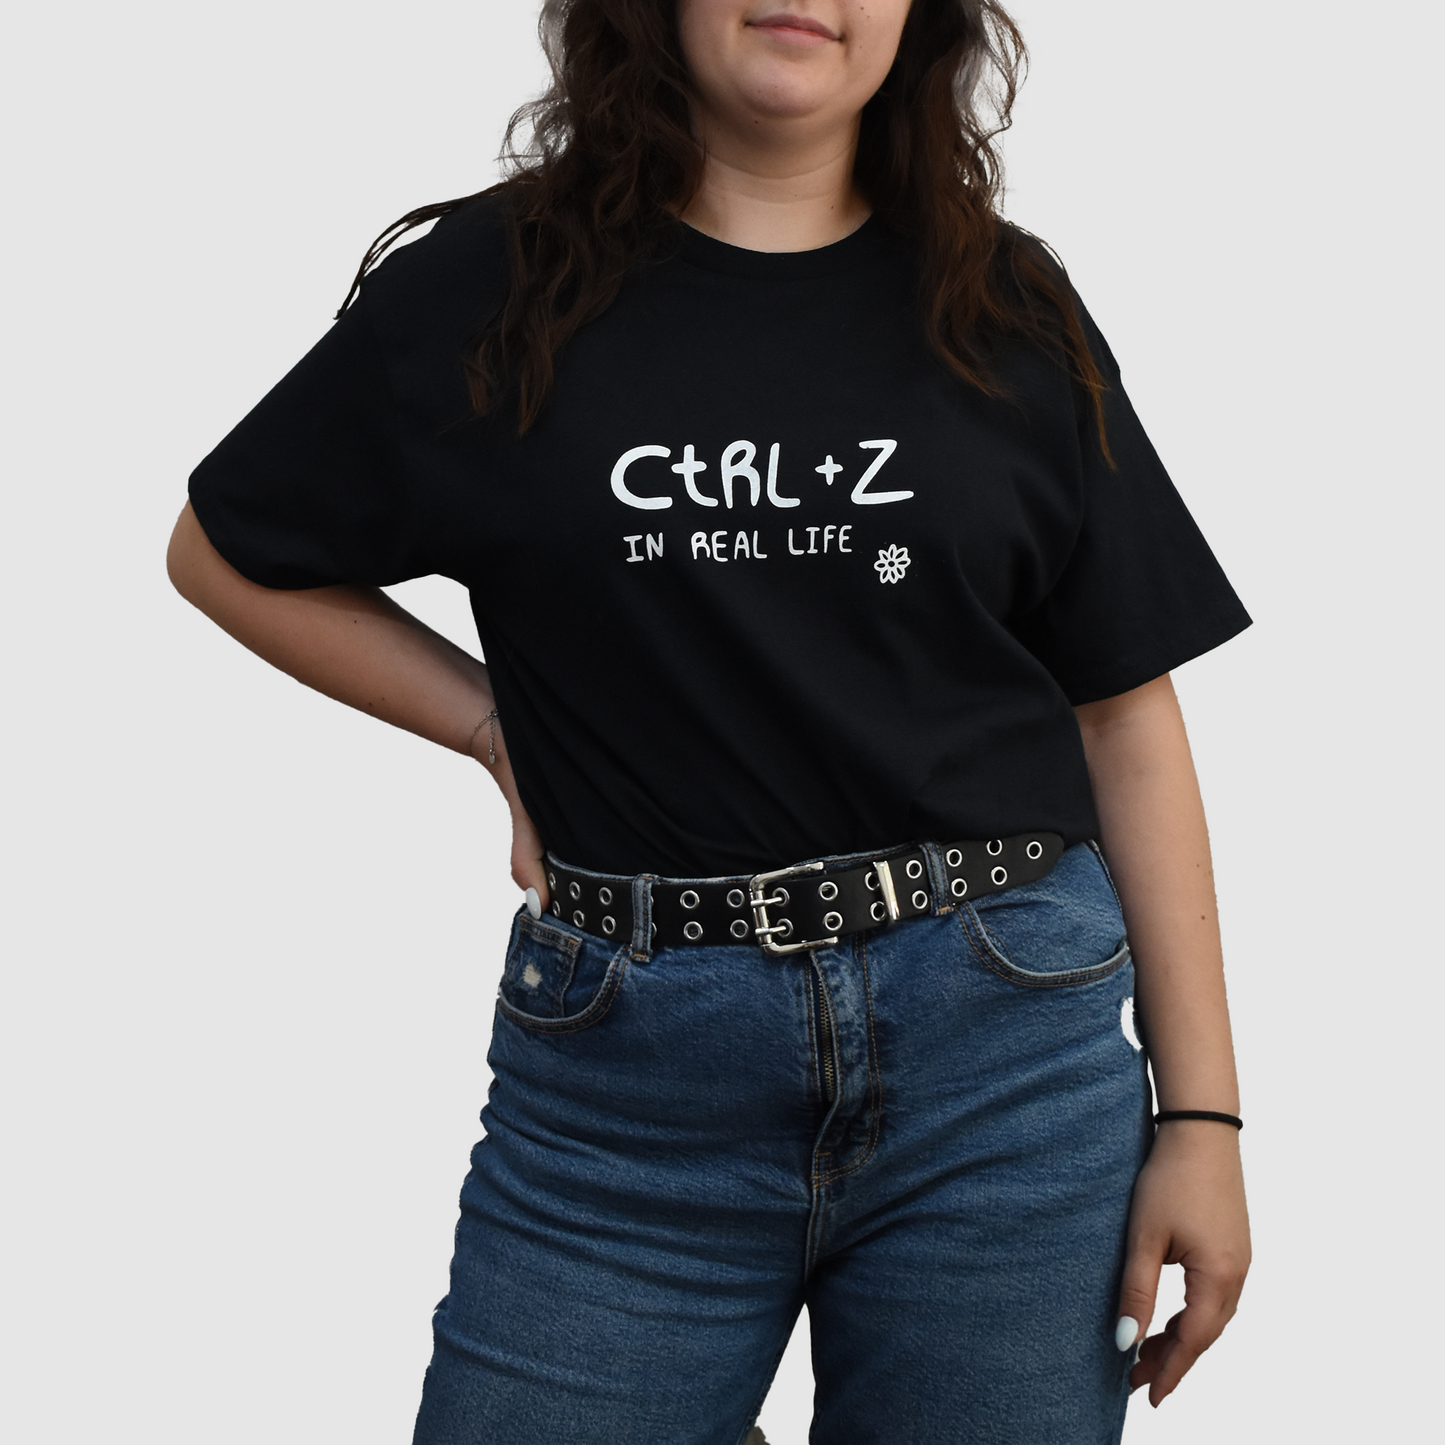 Keyboard - ctrl z in real life t-shirt